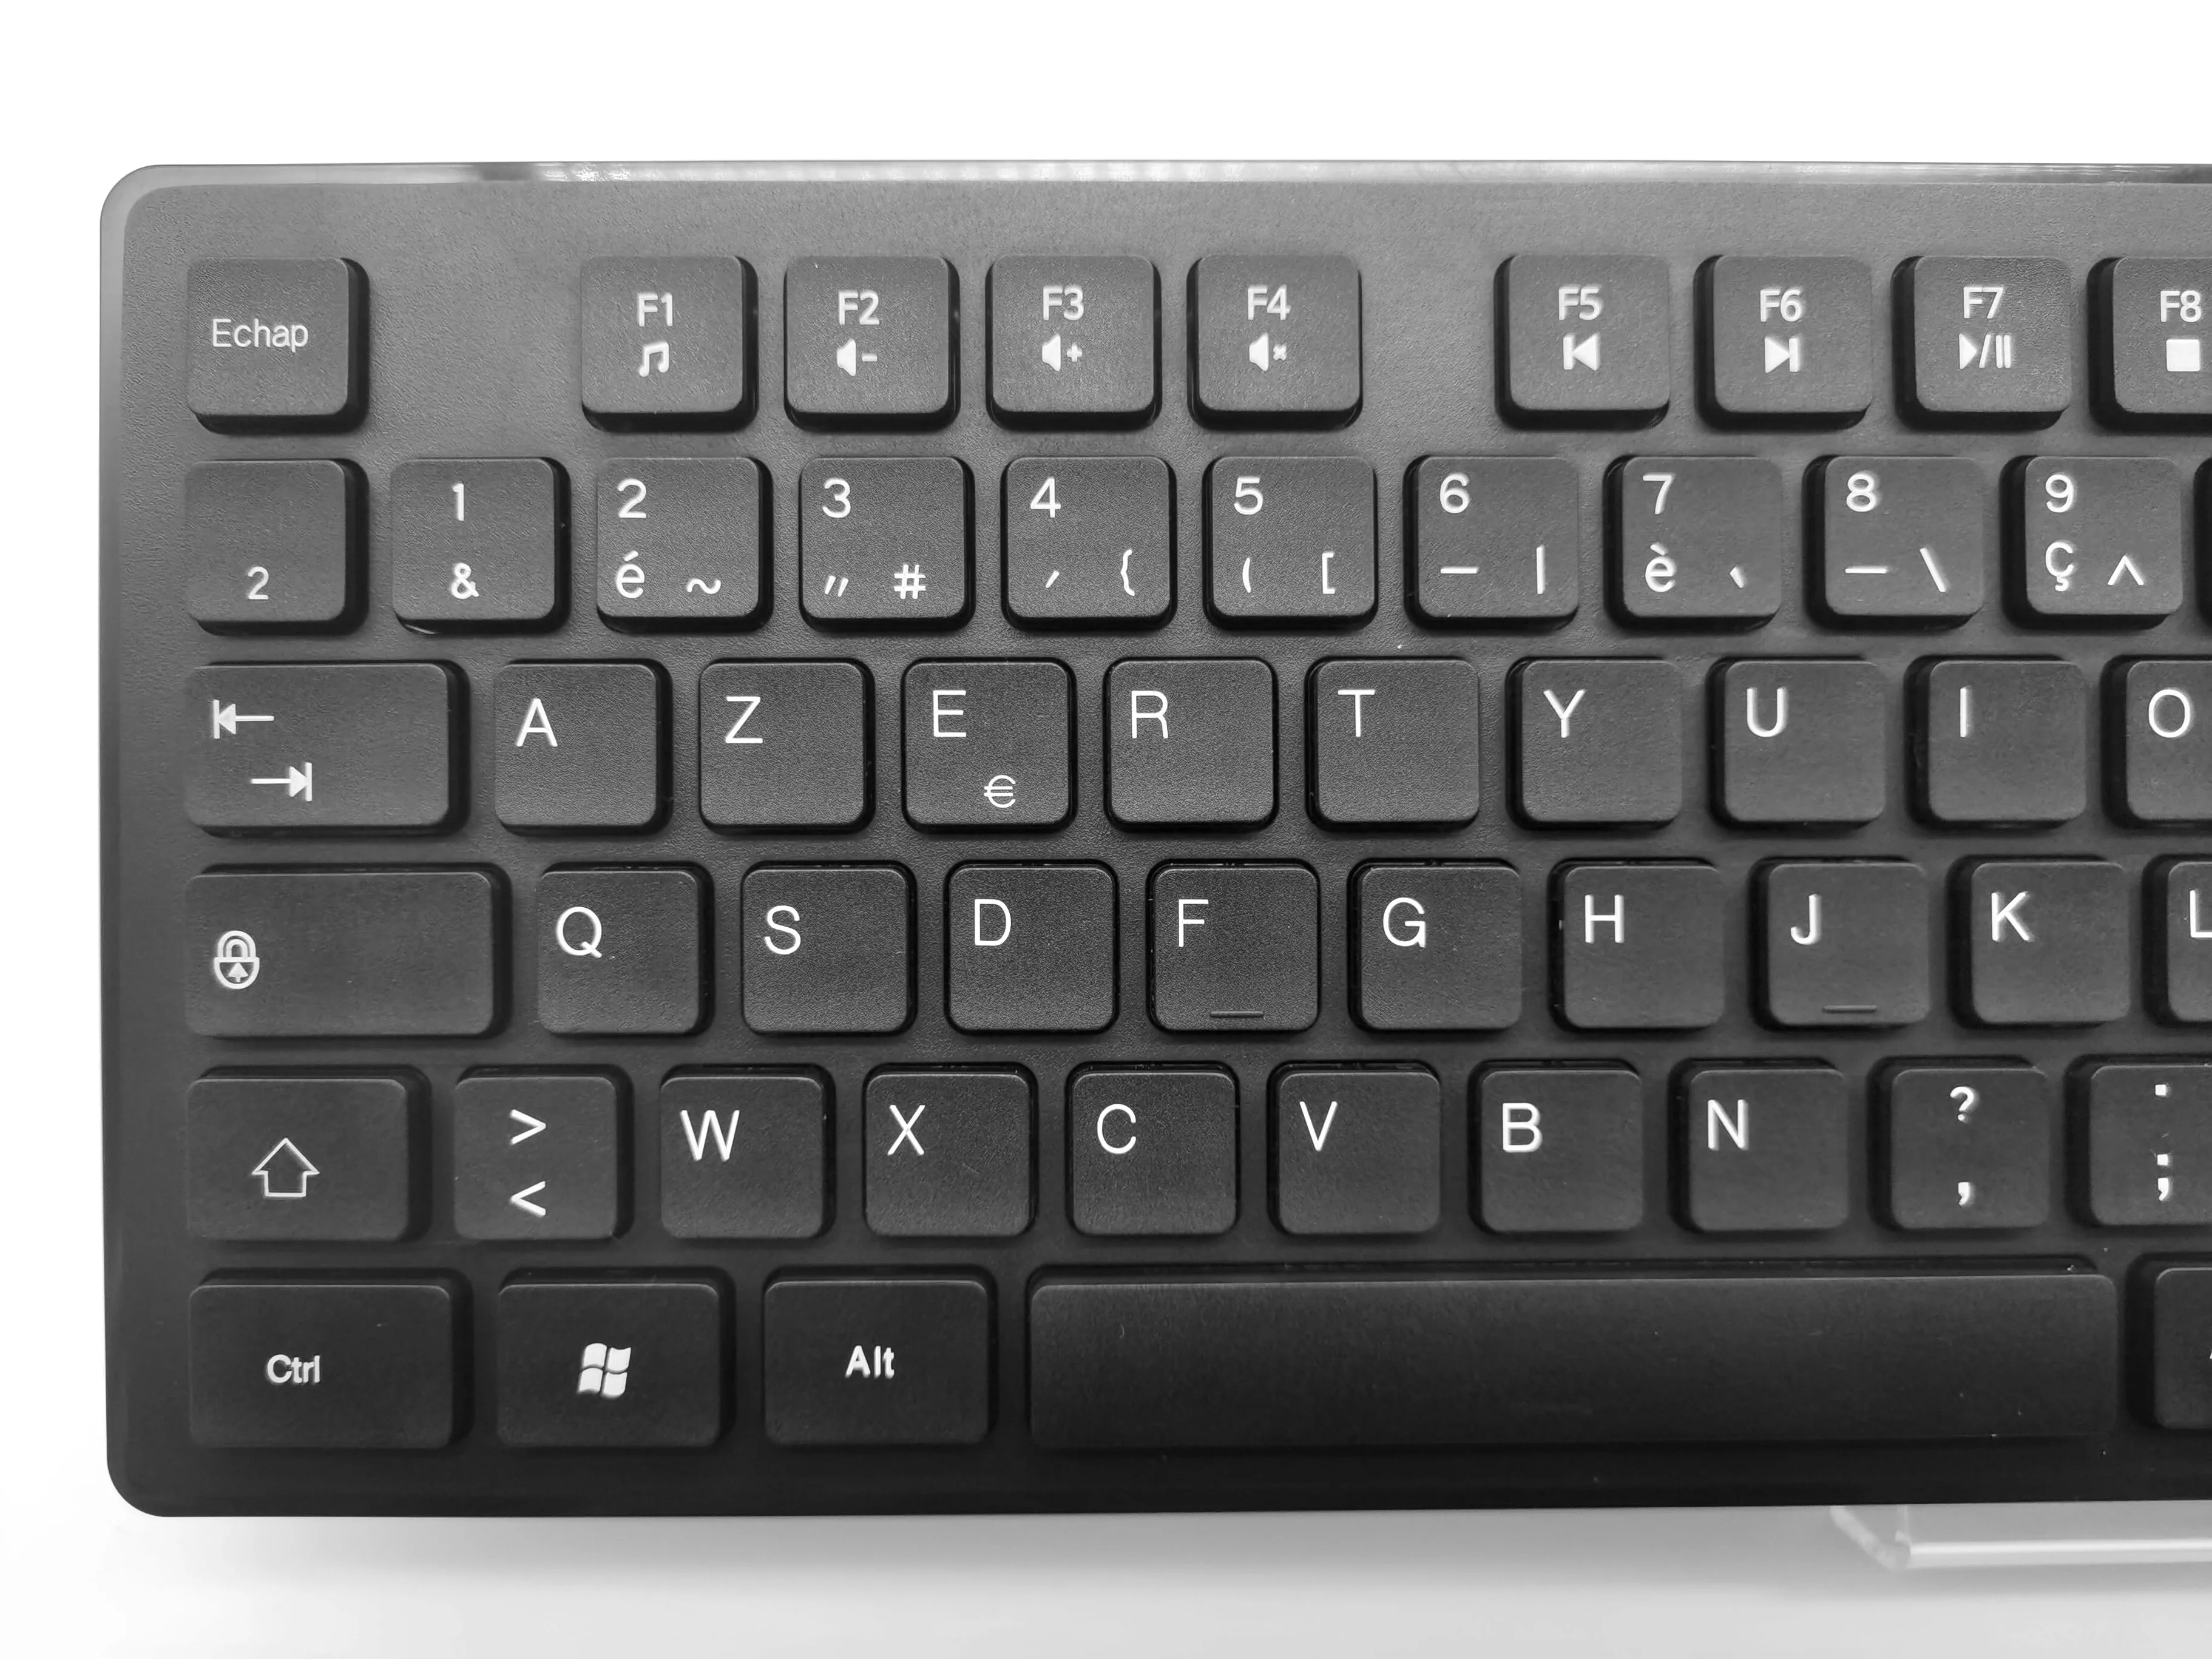 jpeg image of french keyboard layout